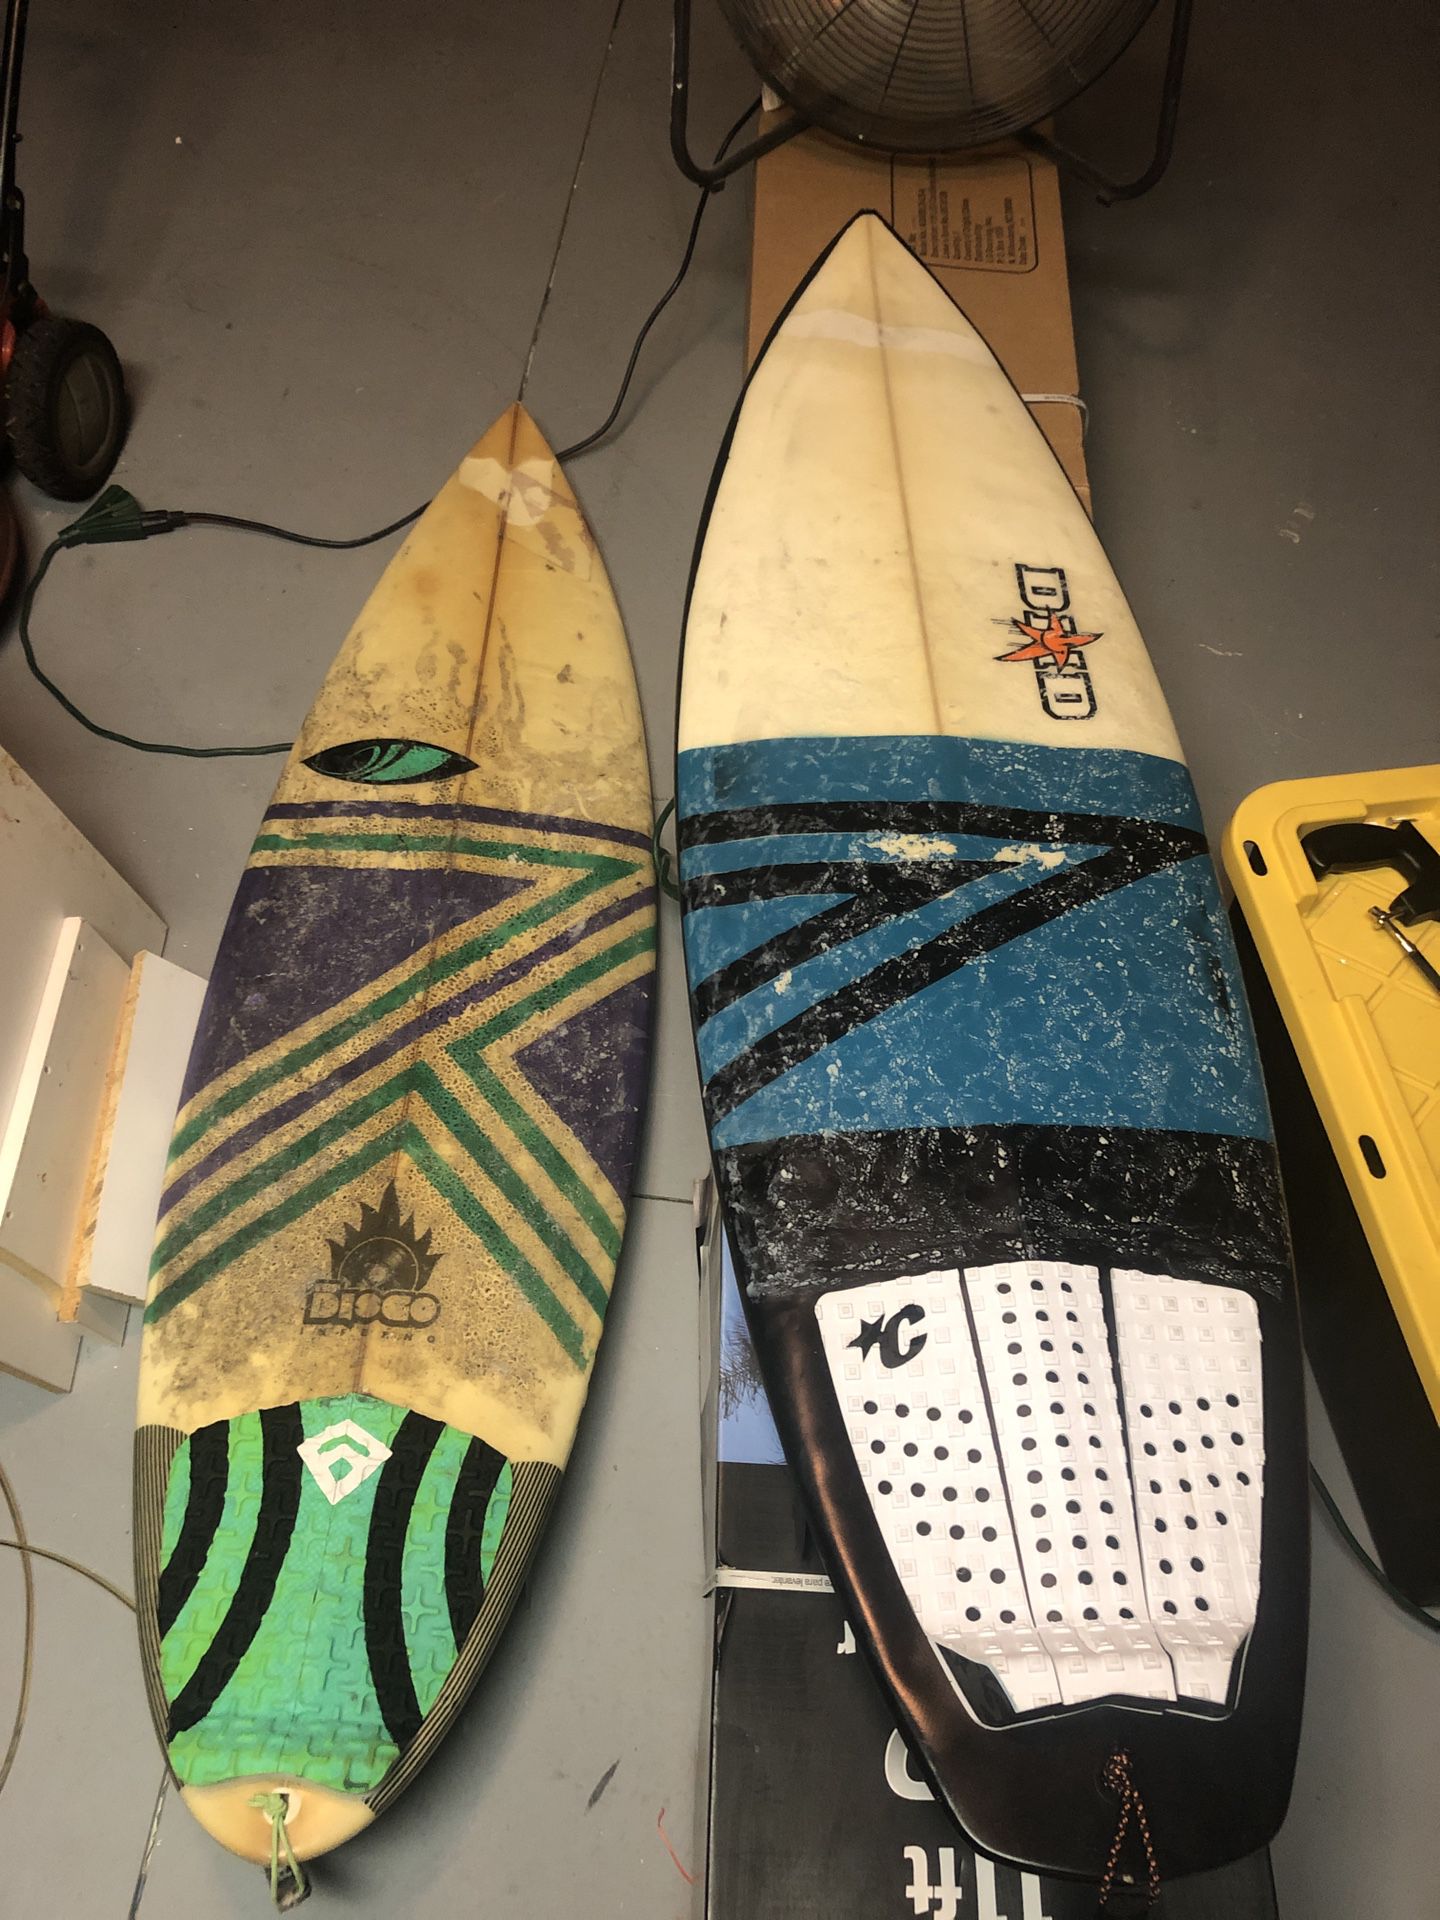 Surfboards 4 sale